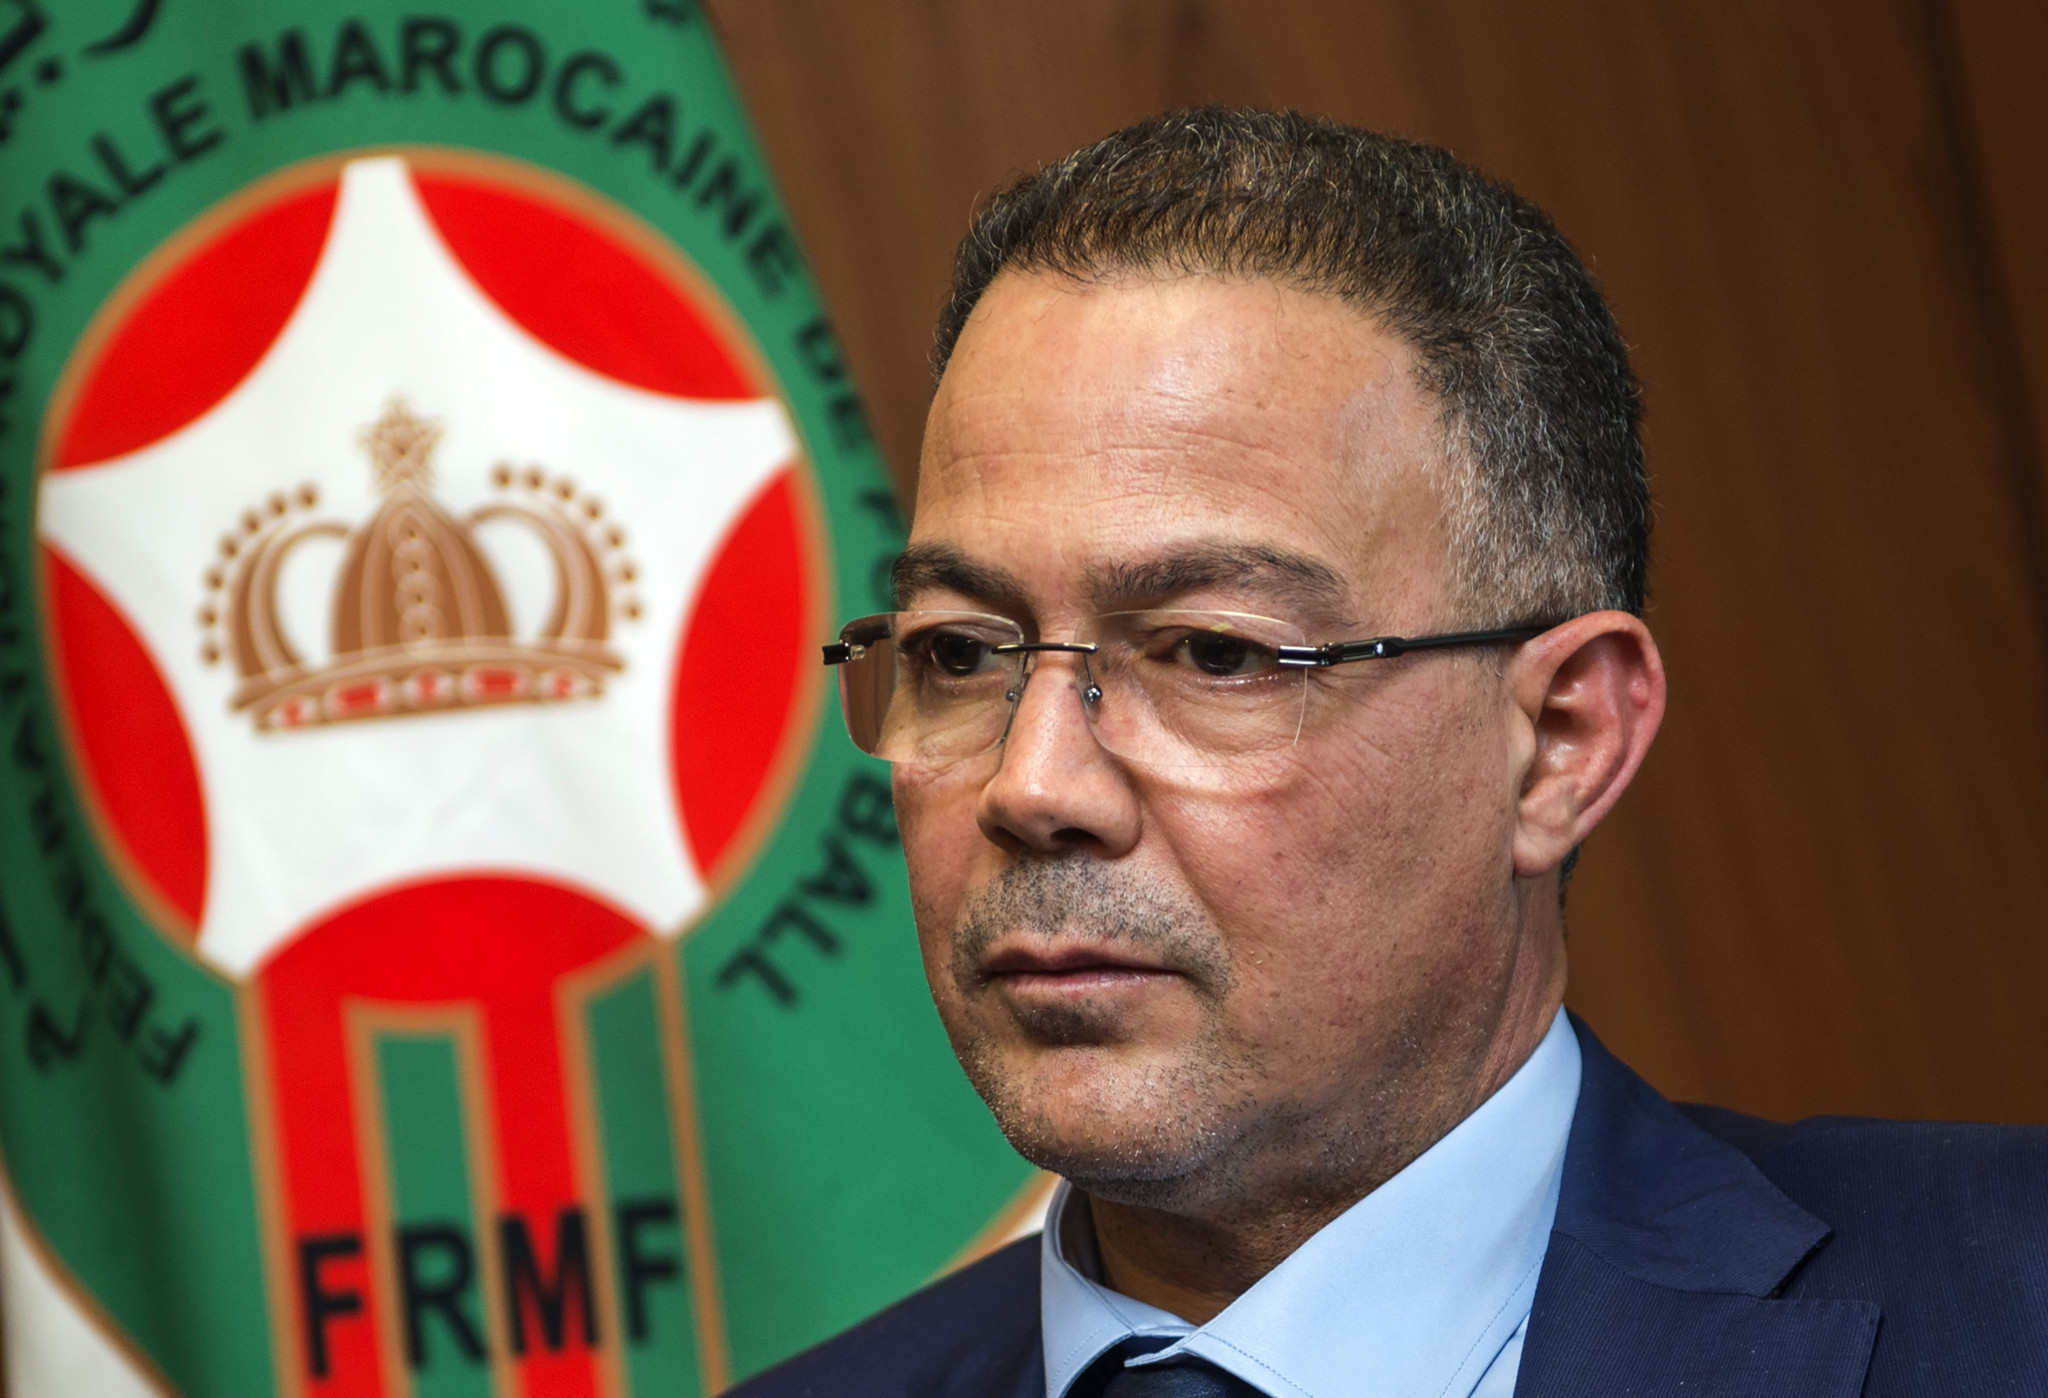 Morocco threatening to boycott African Nations Championship in Algeria unless demands met